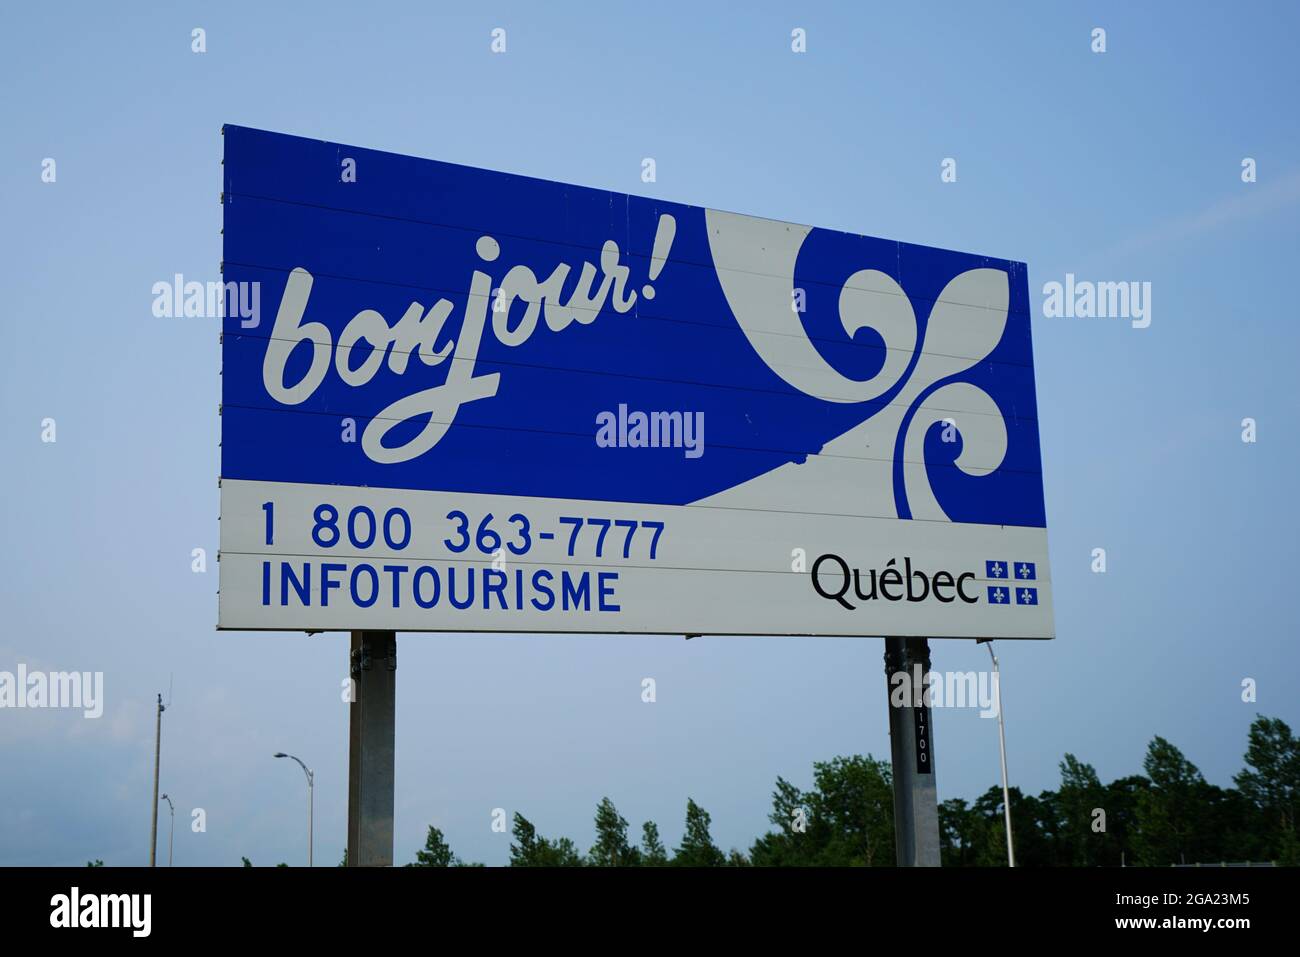 Montreal,Quebec,Canada,July 19, 2021.Quebec Bonjour greeting sign near the US border.Mario Beauregard/Alamy News Stock Photo